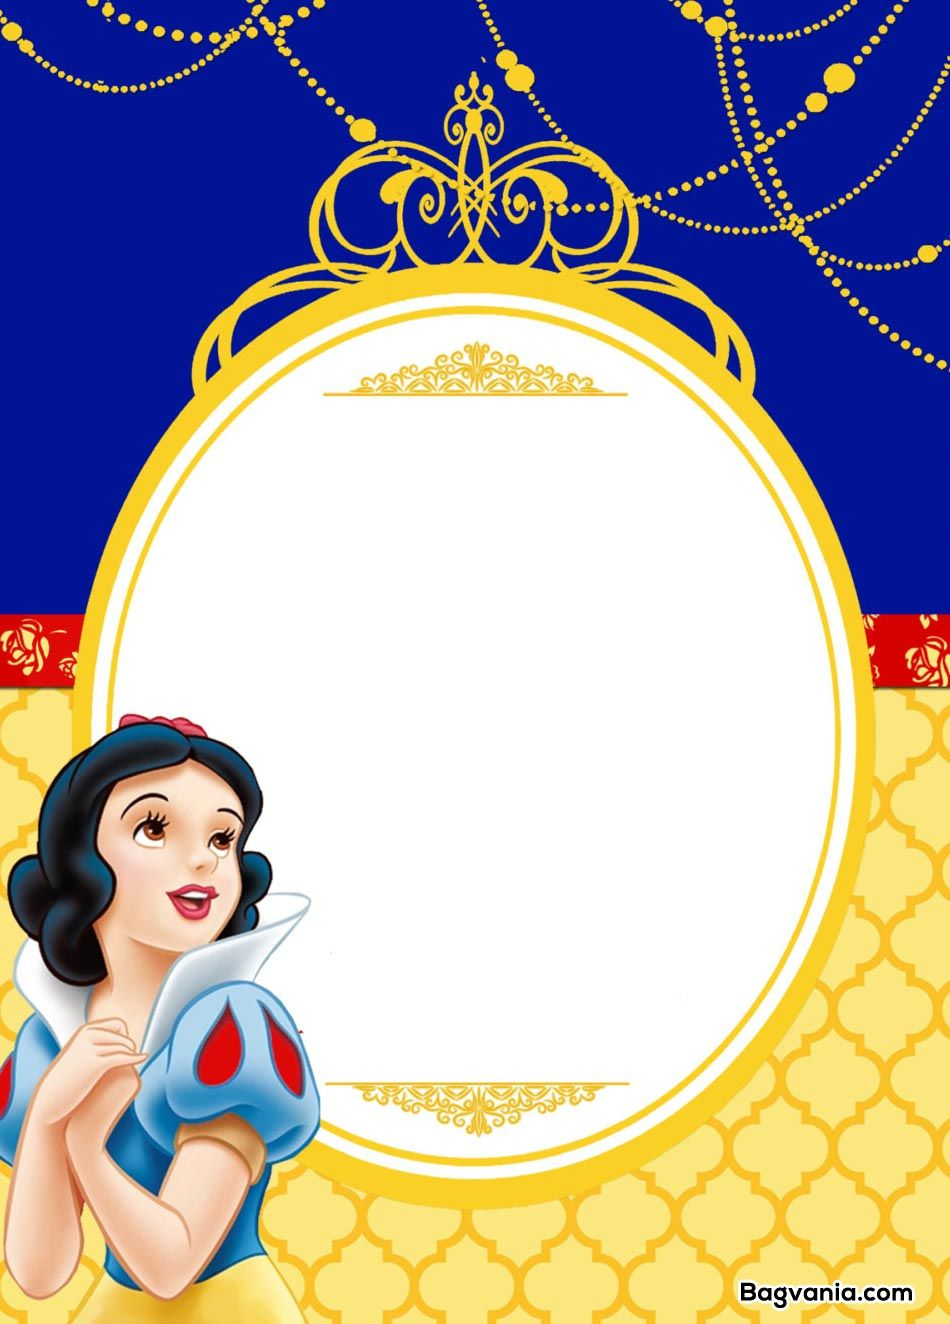 Snow White Invitation Template • Business Template Ideas